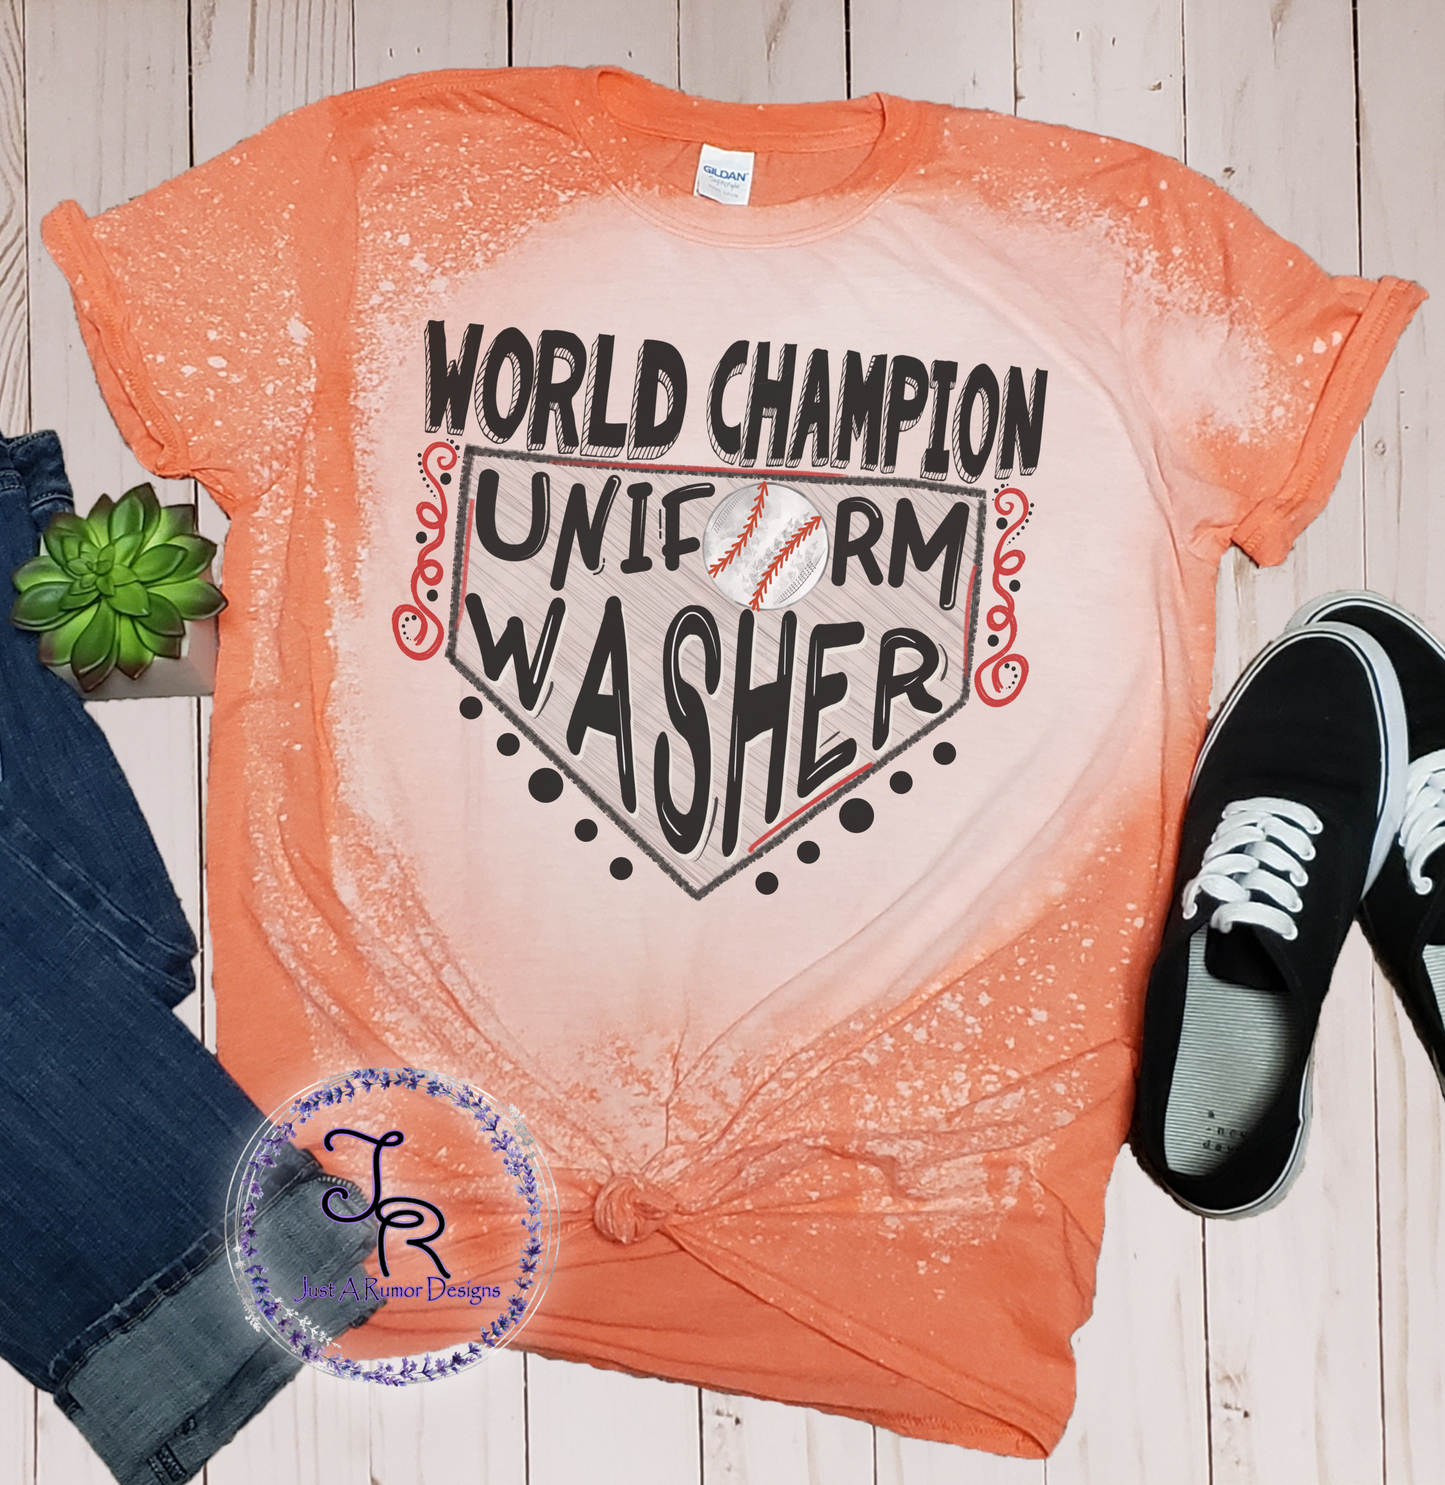 Uniform Washer Shirt